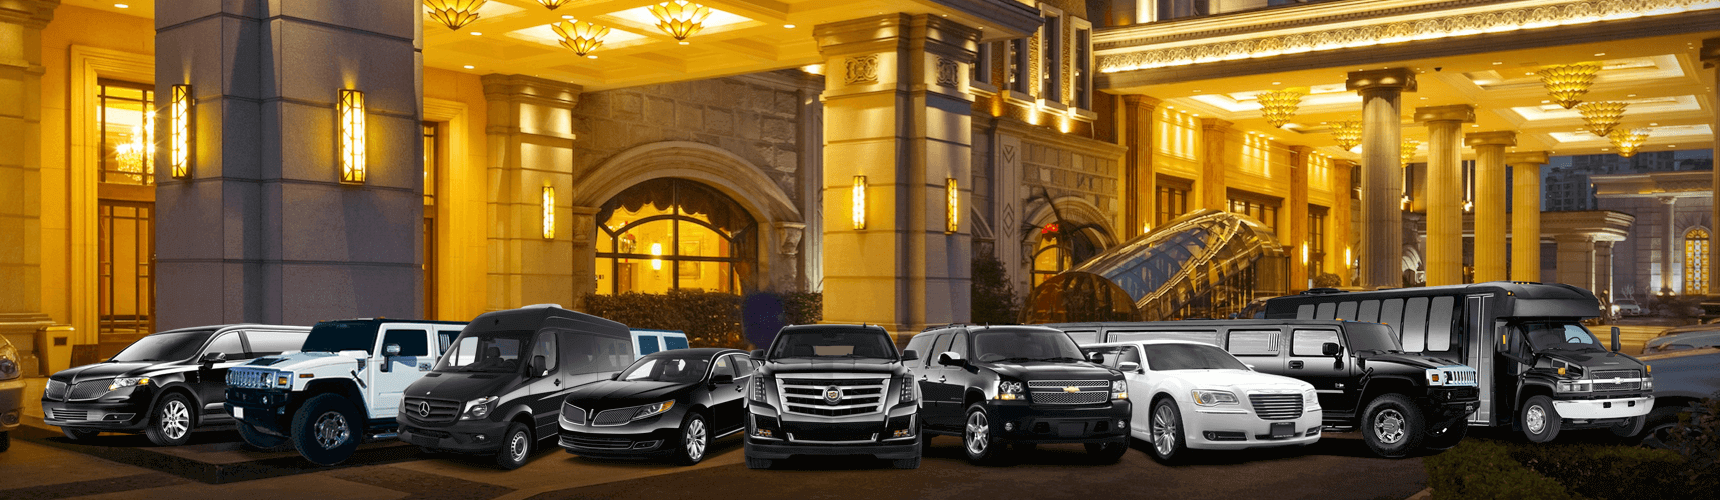 discount LAX limousine service prices